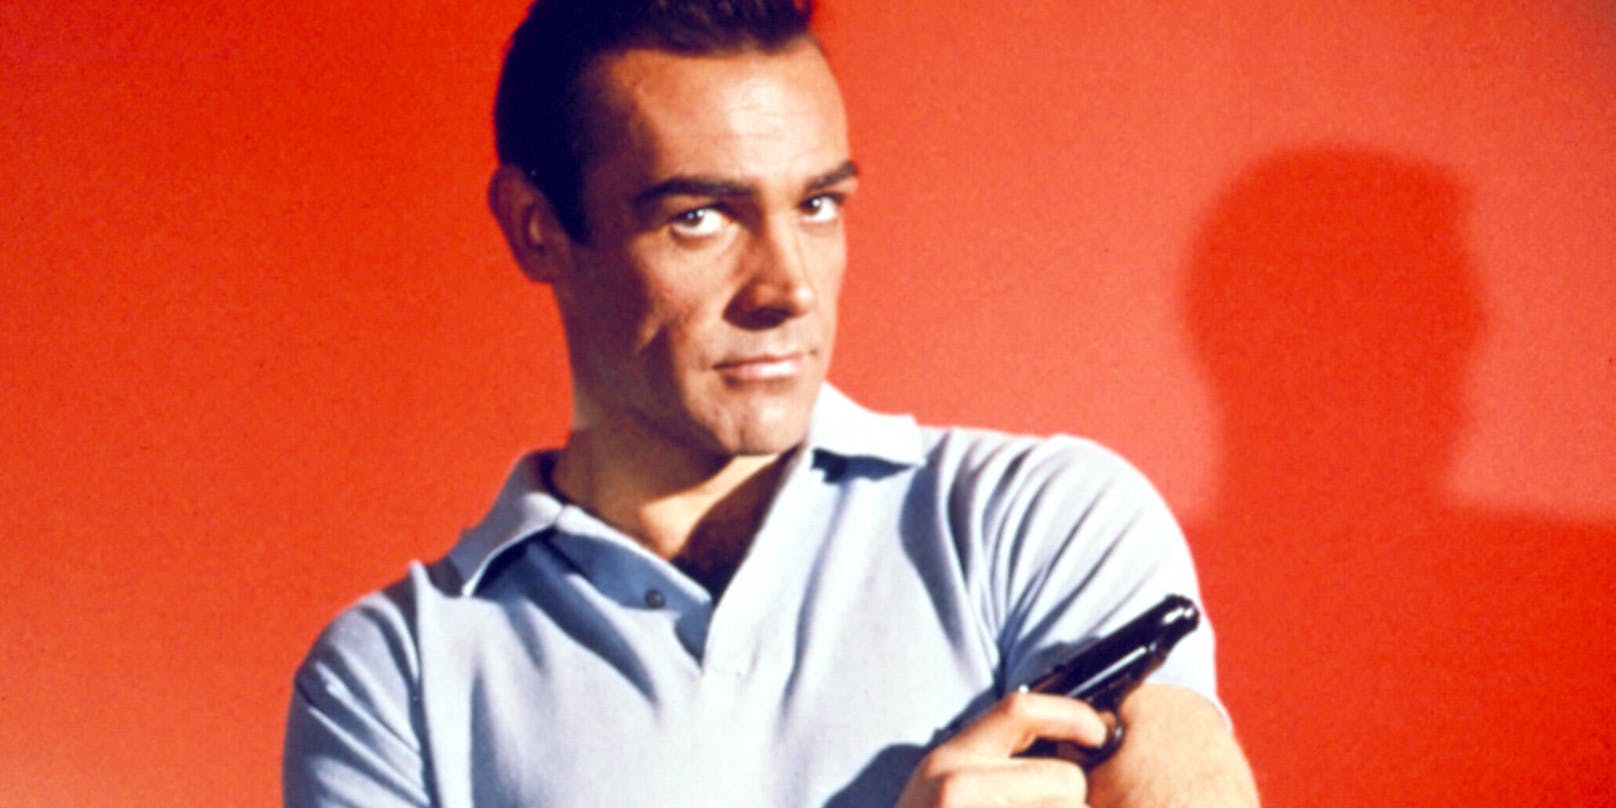 Sean Connery als James Bond in "Dr. No"